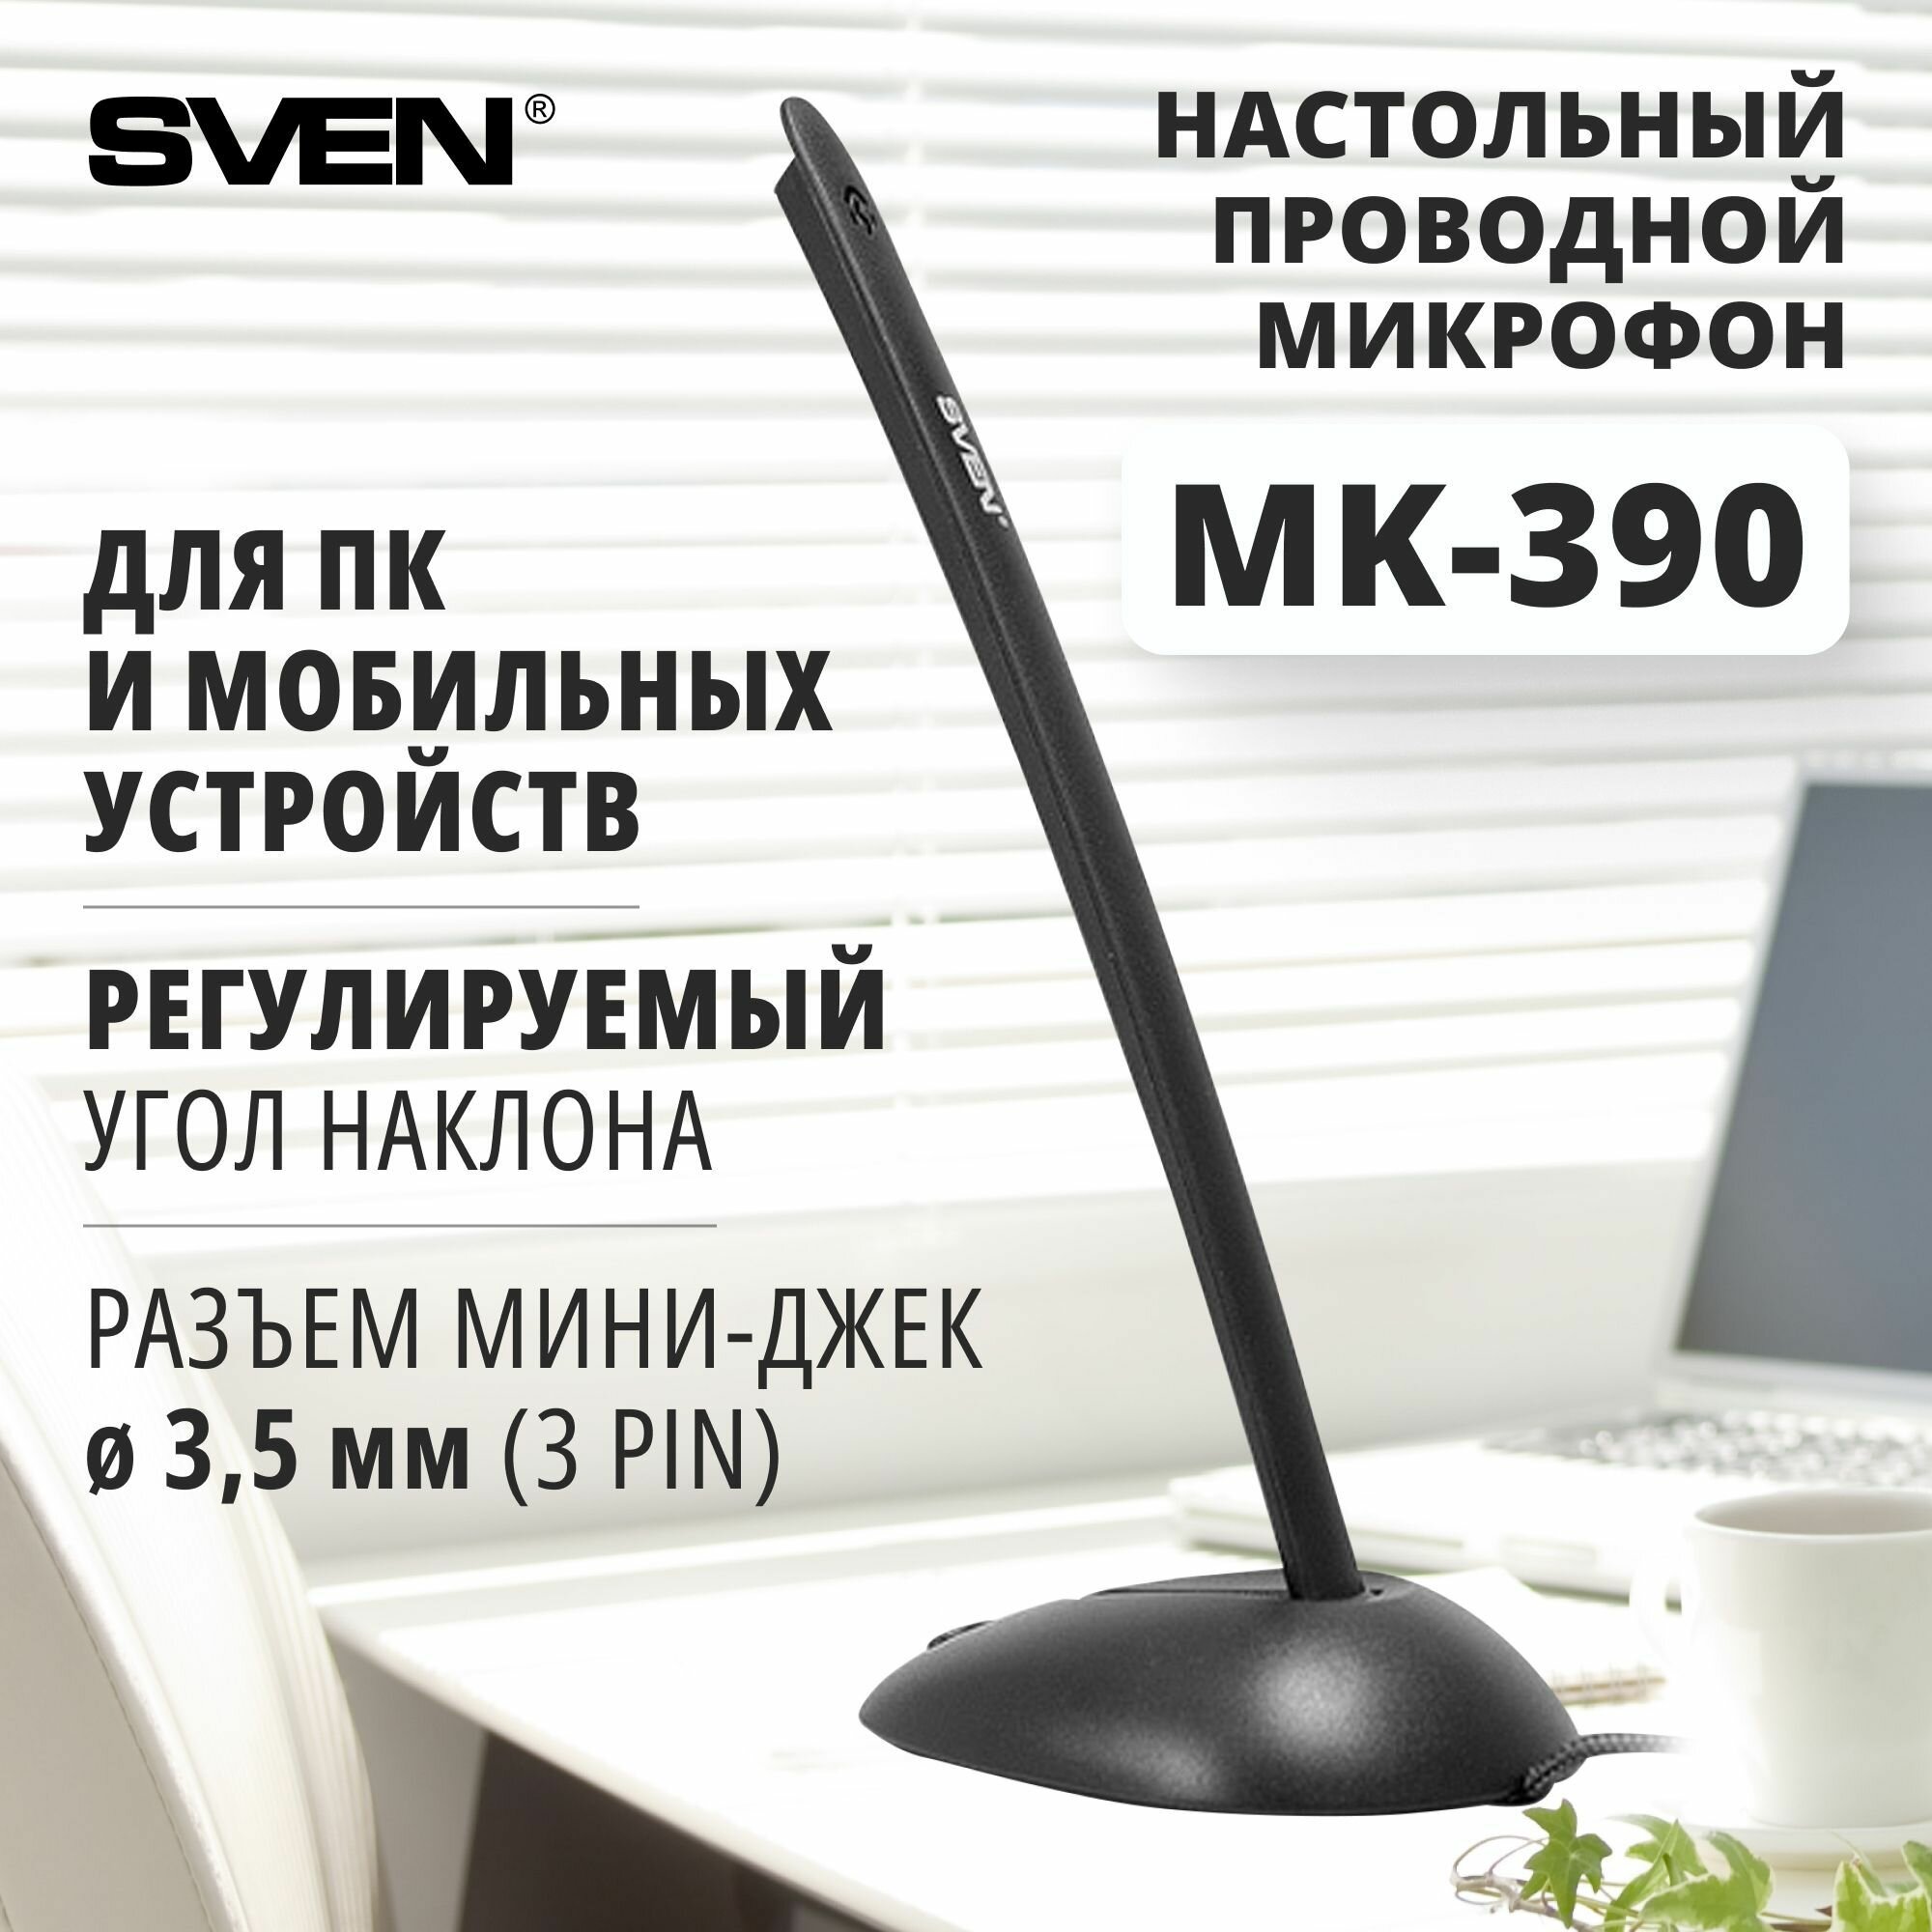 Микрофон MK-390